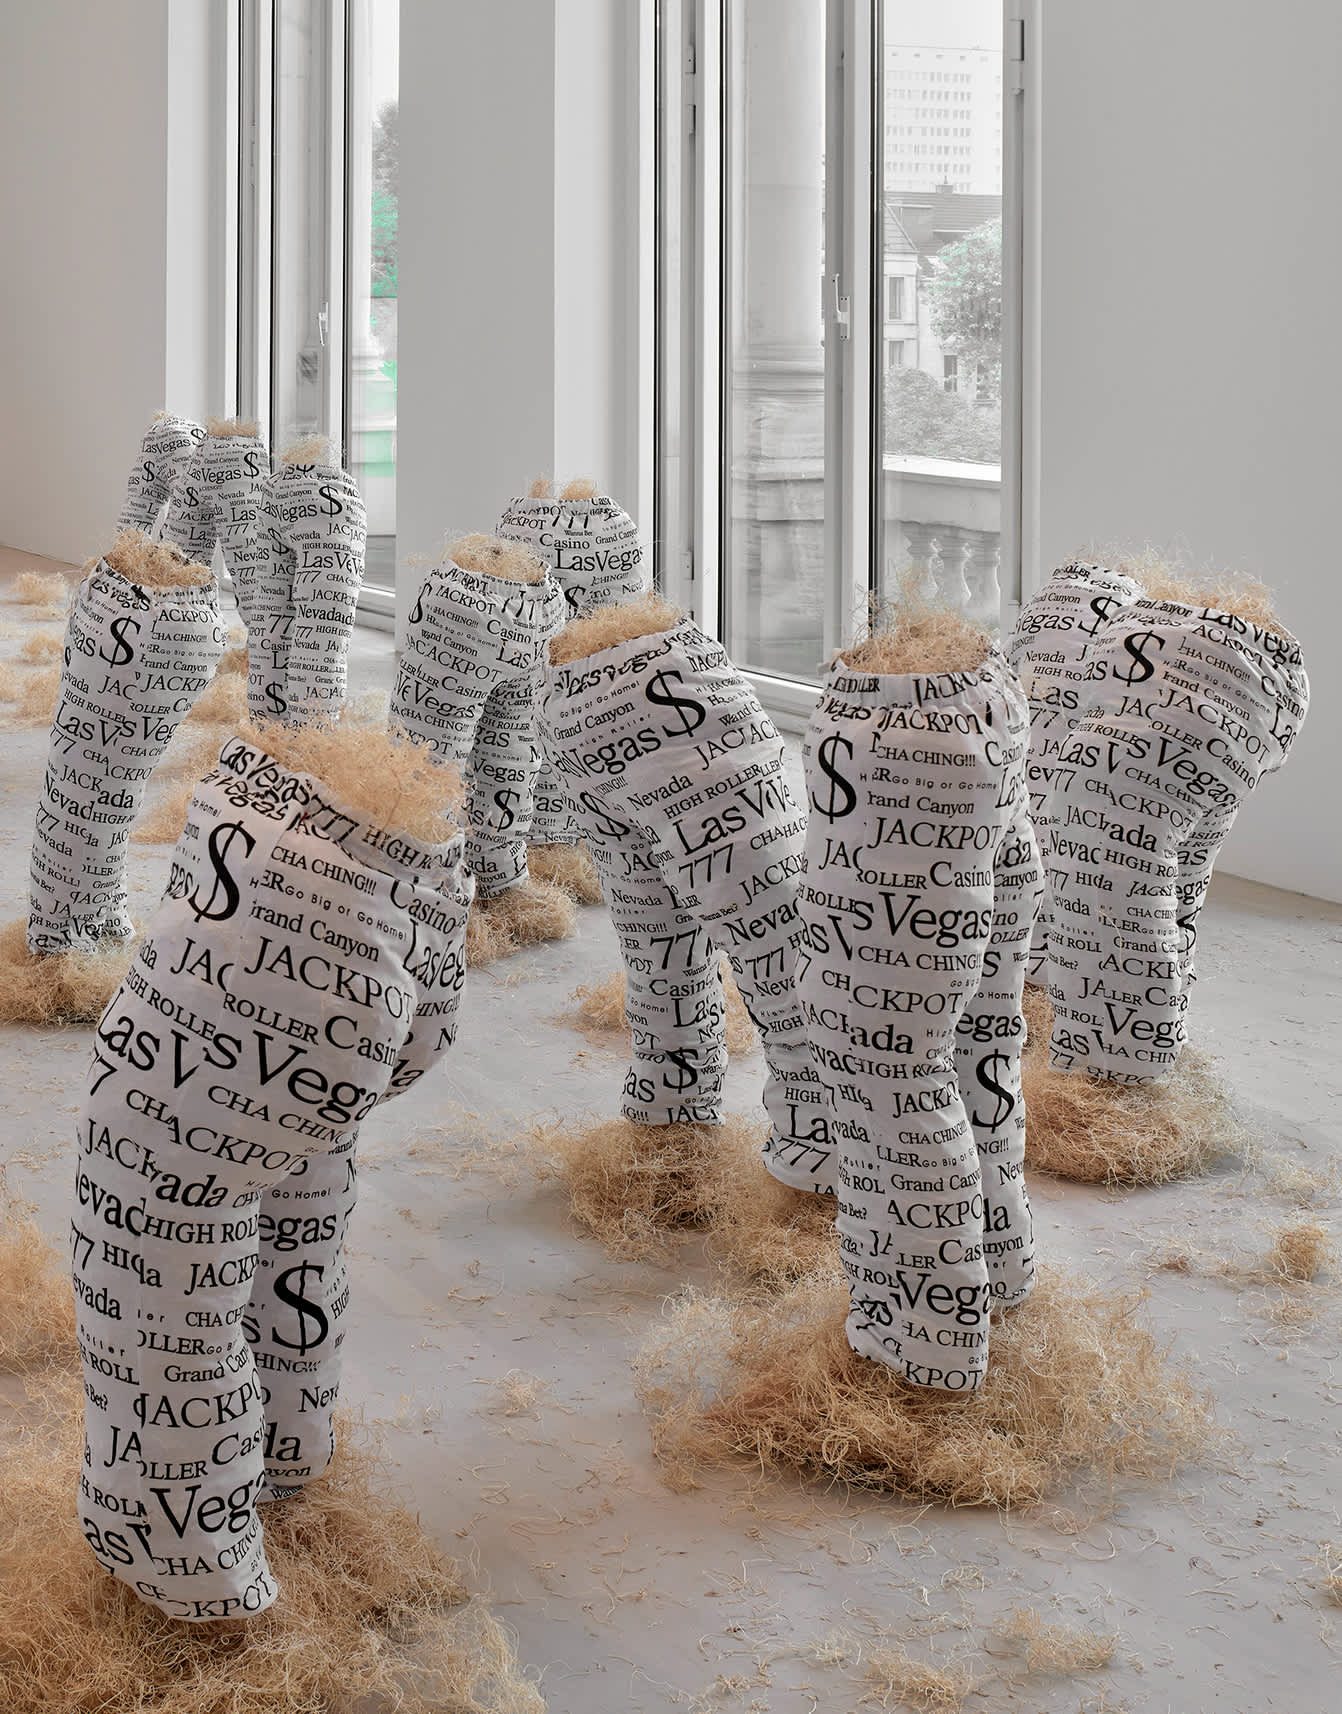 Lutz Bacher, “Vegas Pants“ (2018). 60 000 €. Courtesy of Blum & Poe Gallery
